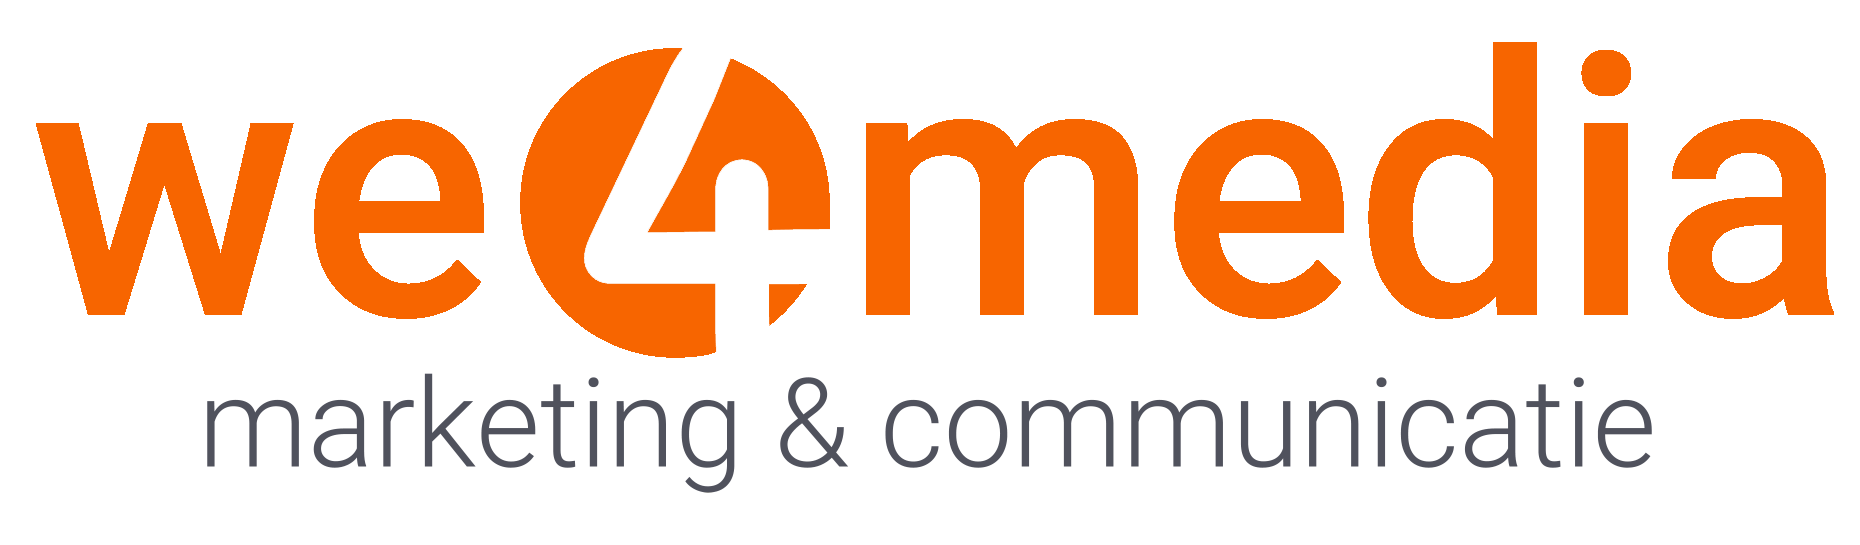 Logo We4Media ORANJEBLAUW